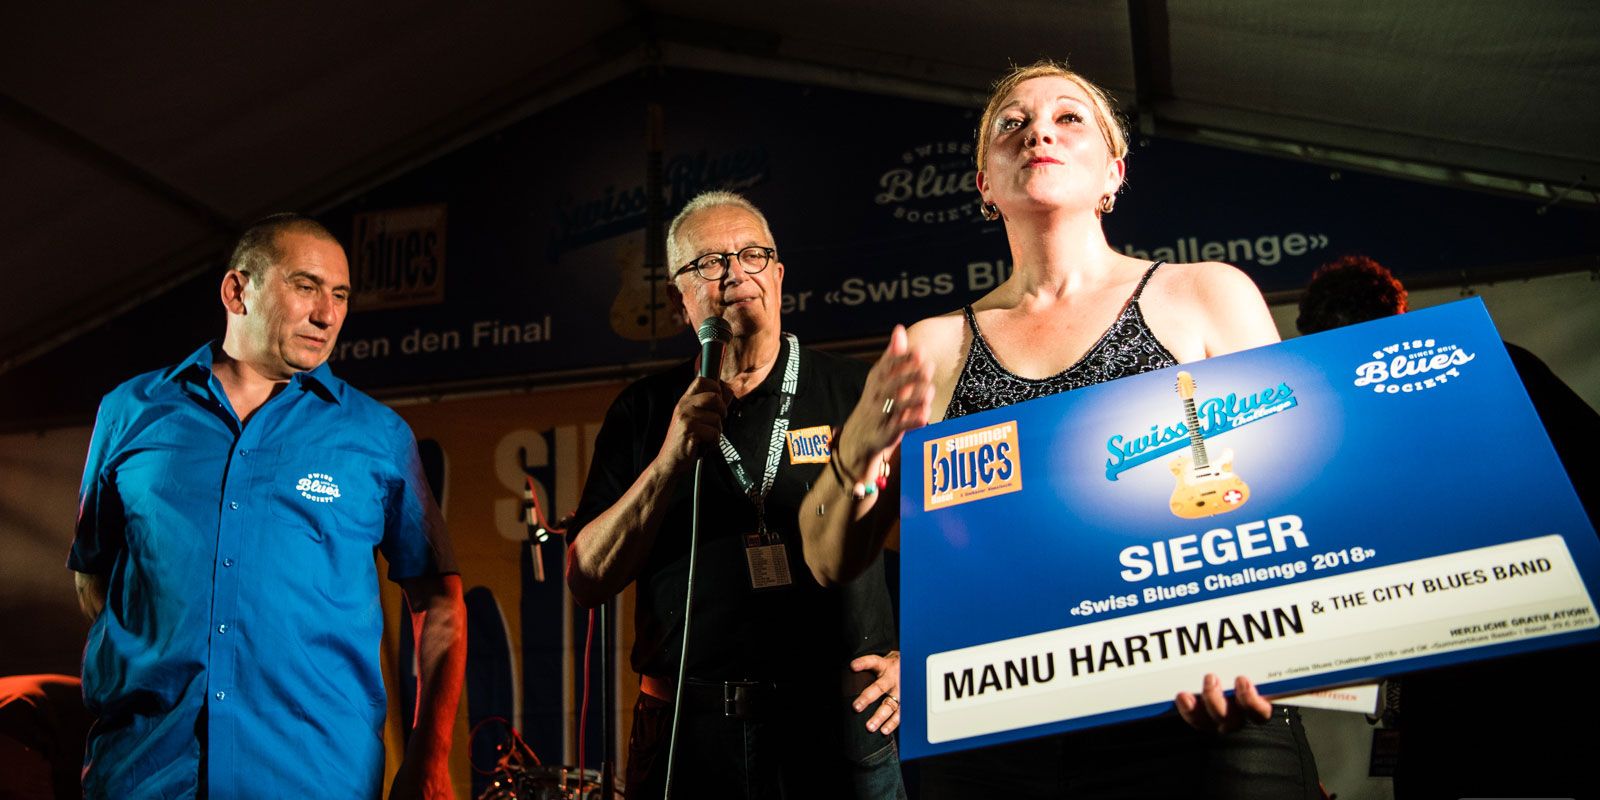 Manu Hartmann vince lo Swiss Blues Challenge 2018!